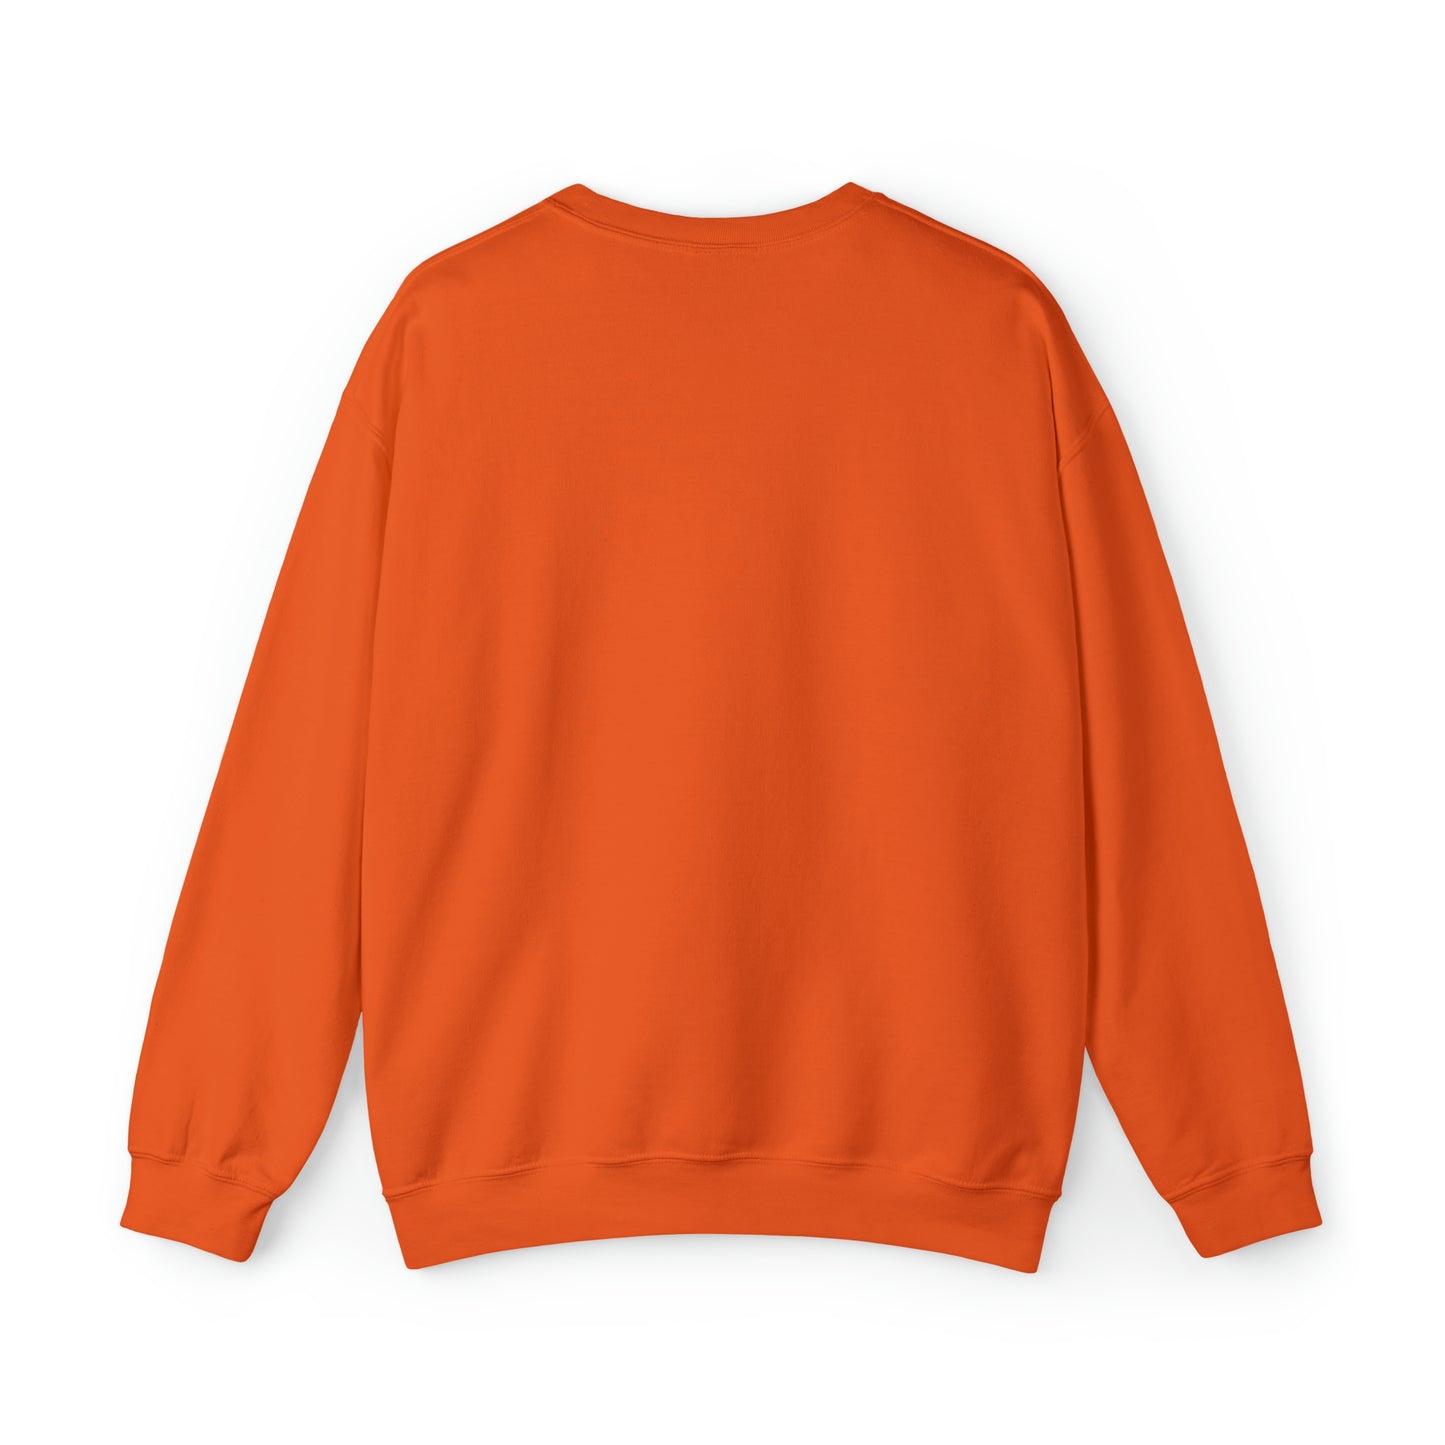 Let’s Get Spook Skeleton Pumpkins Unisex Heavy Blend Crewneck Sweatshirt